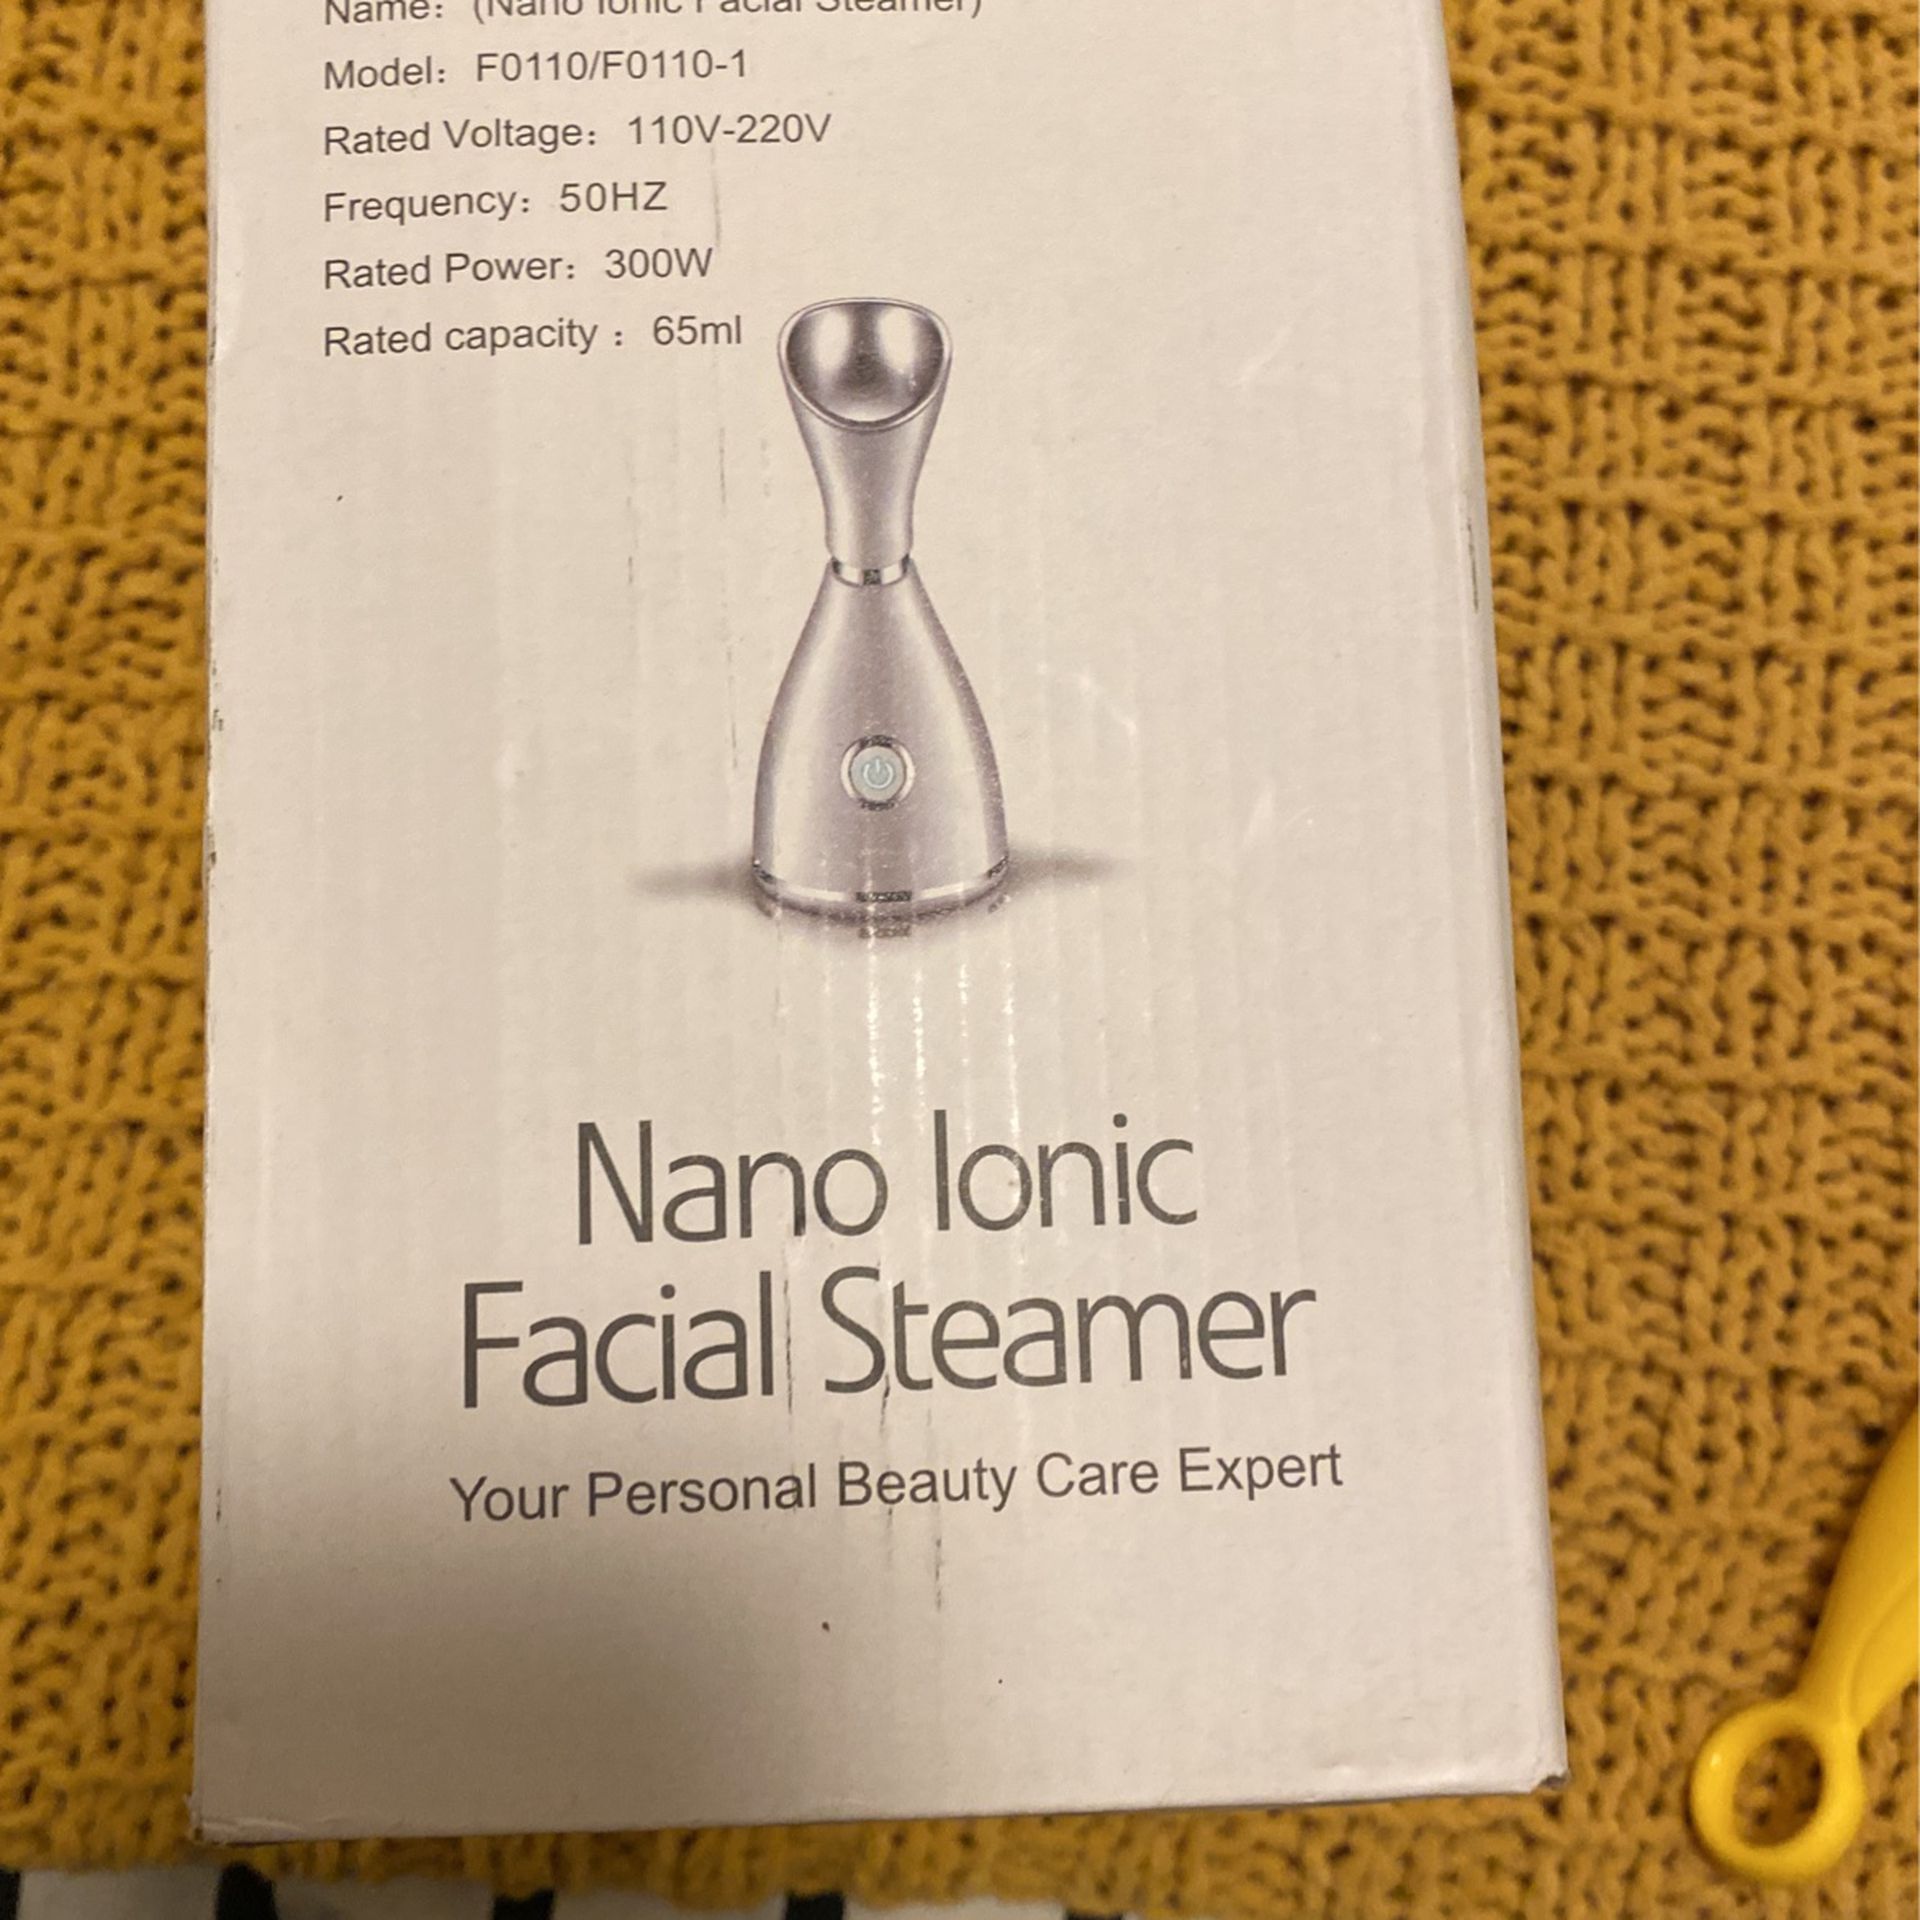 Nani Ionic Facial Steamer